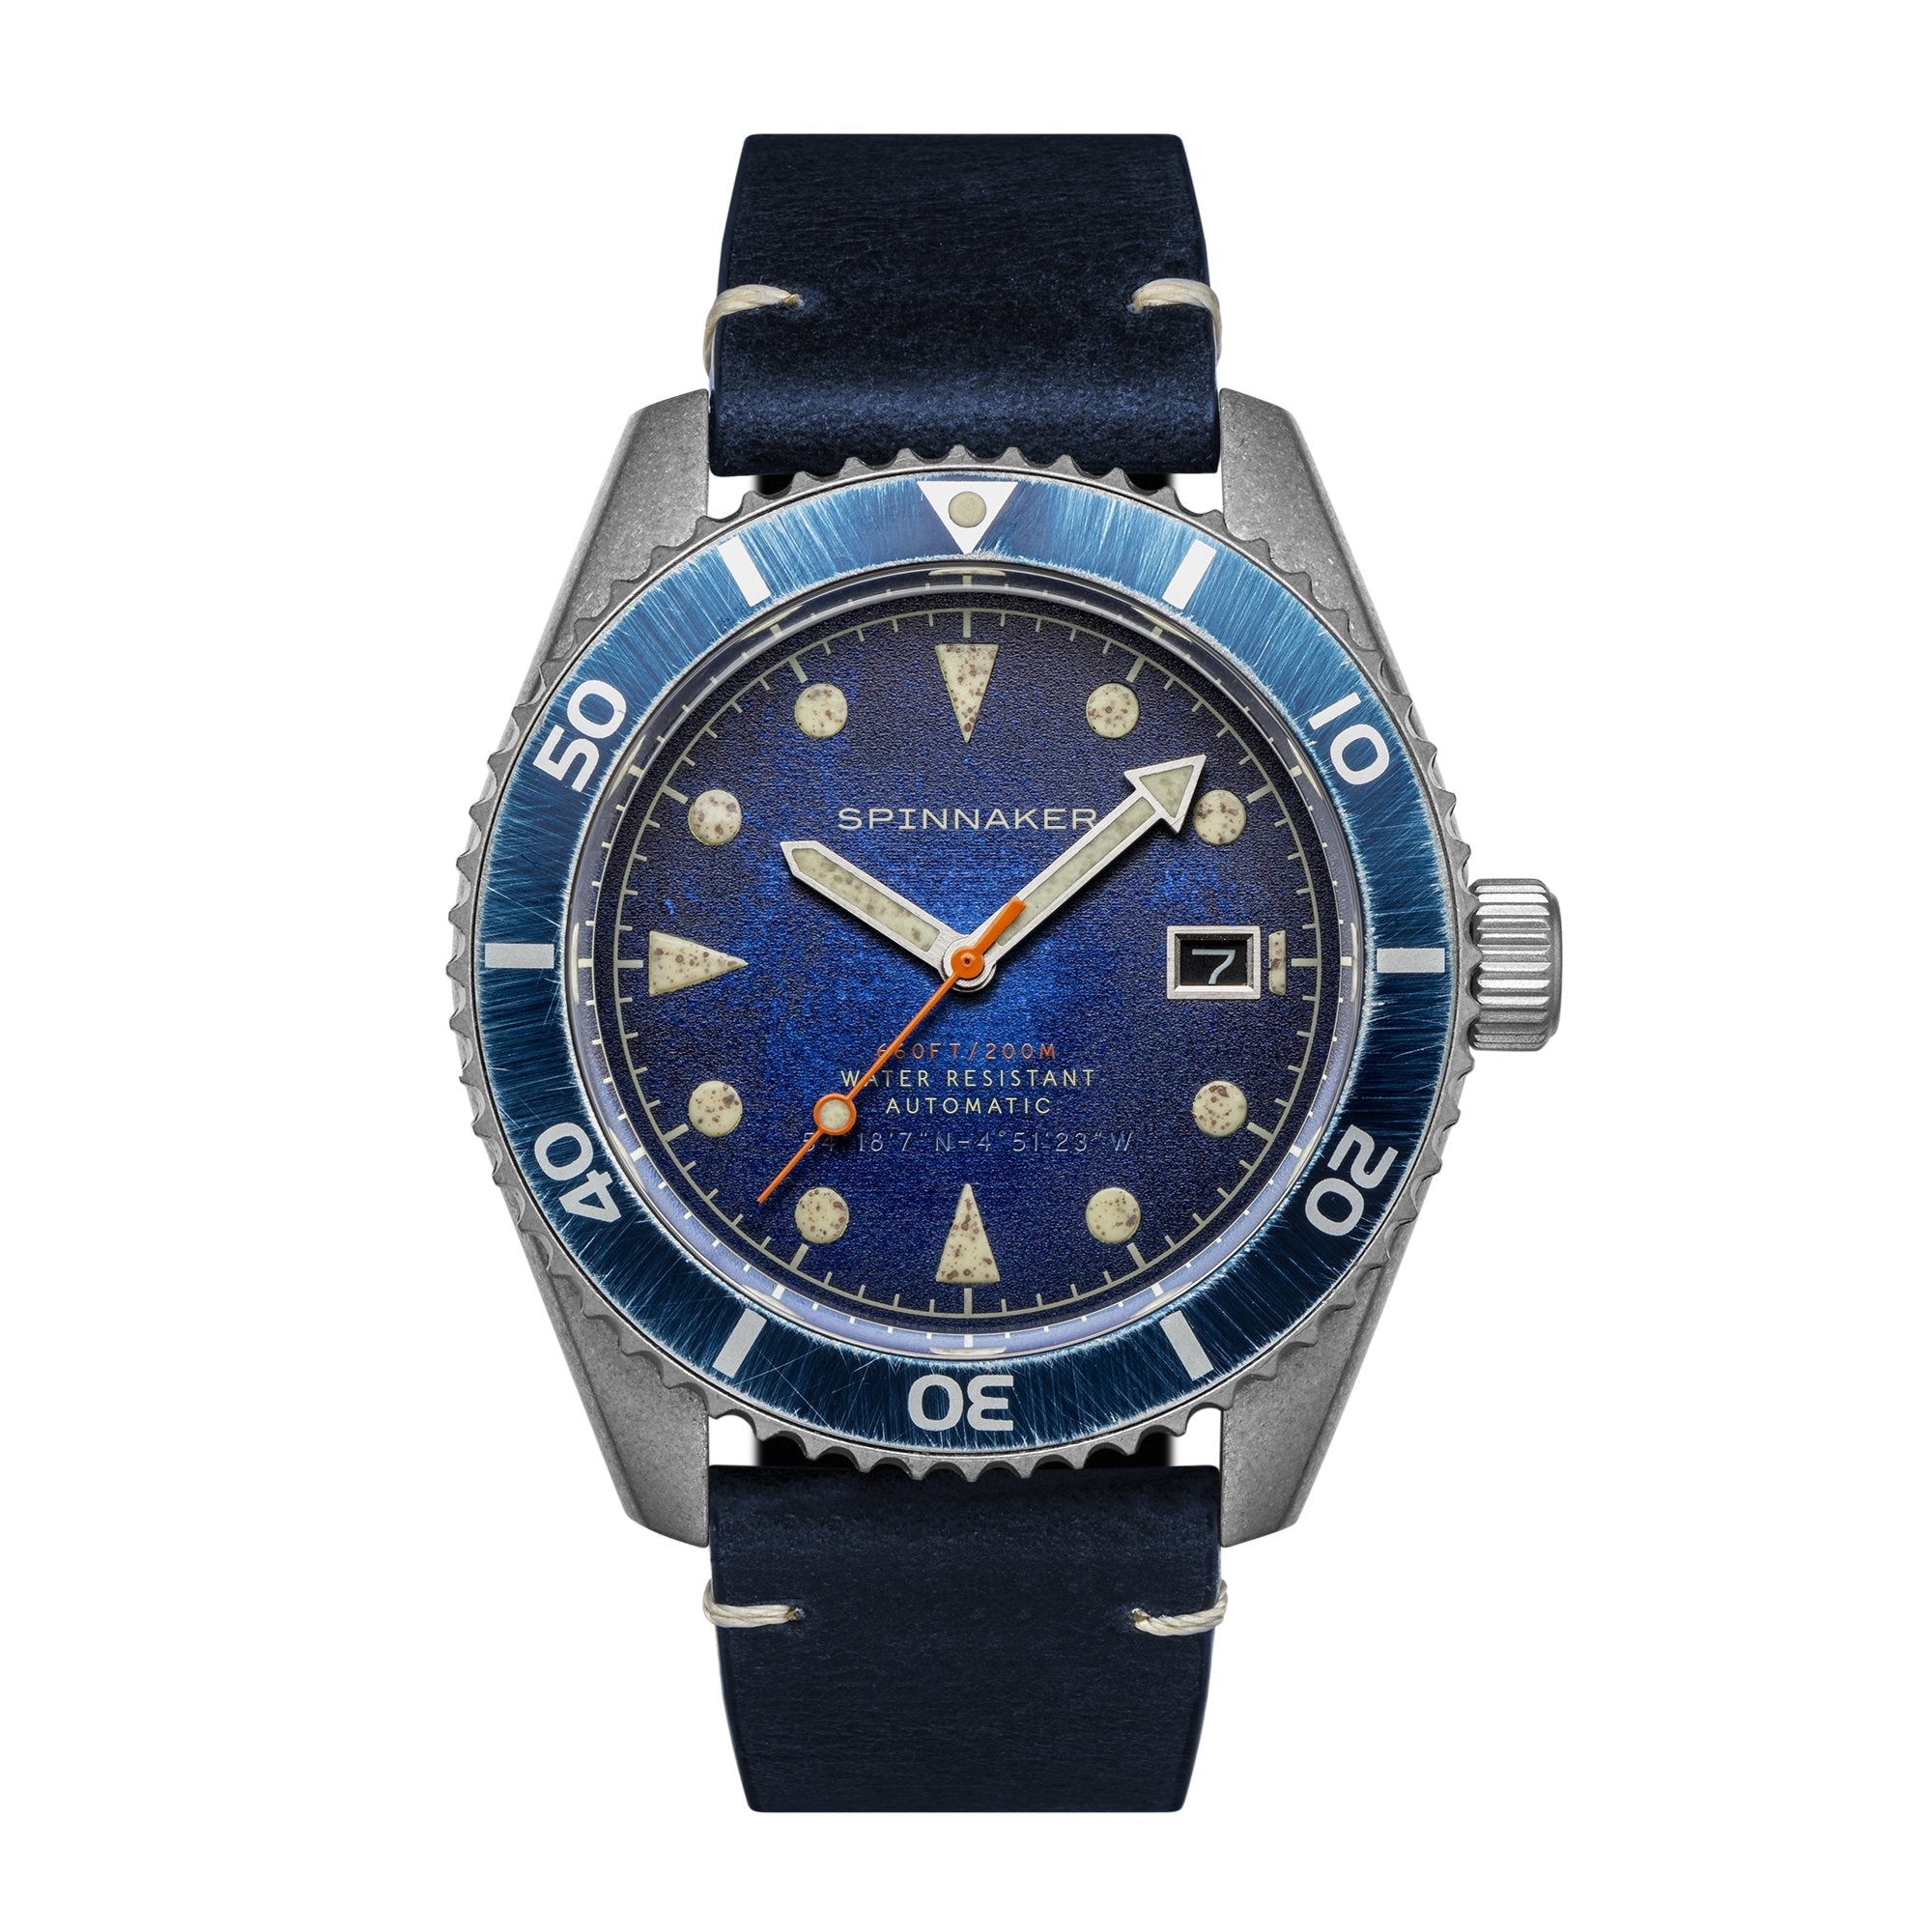 SPINNAKER Spinnaker Wreck Men's Japanese Automatic Oxidized Blue Watch SP-5089-02